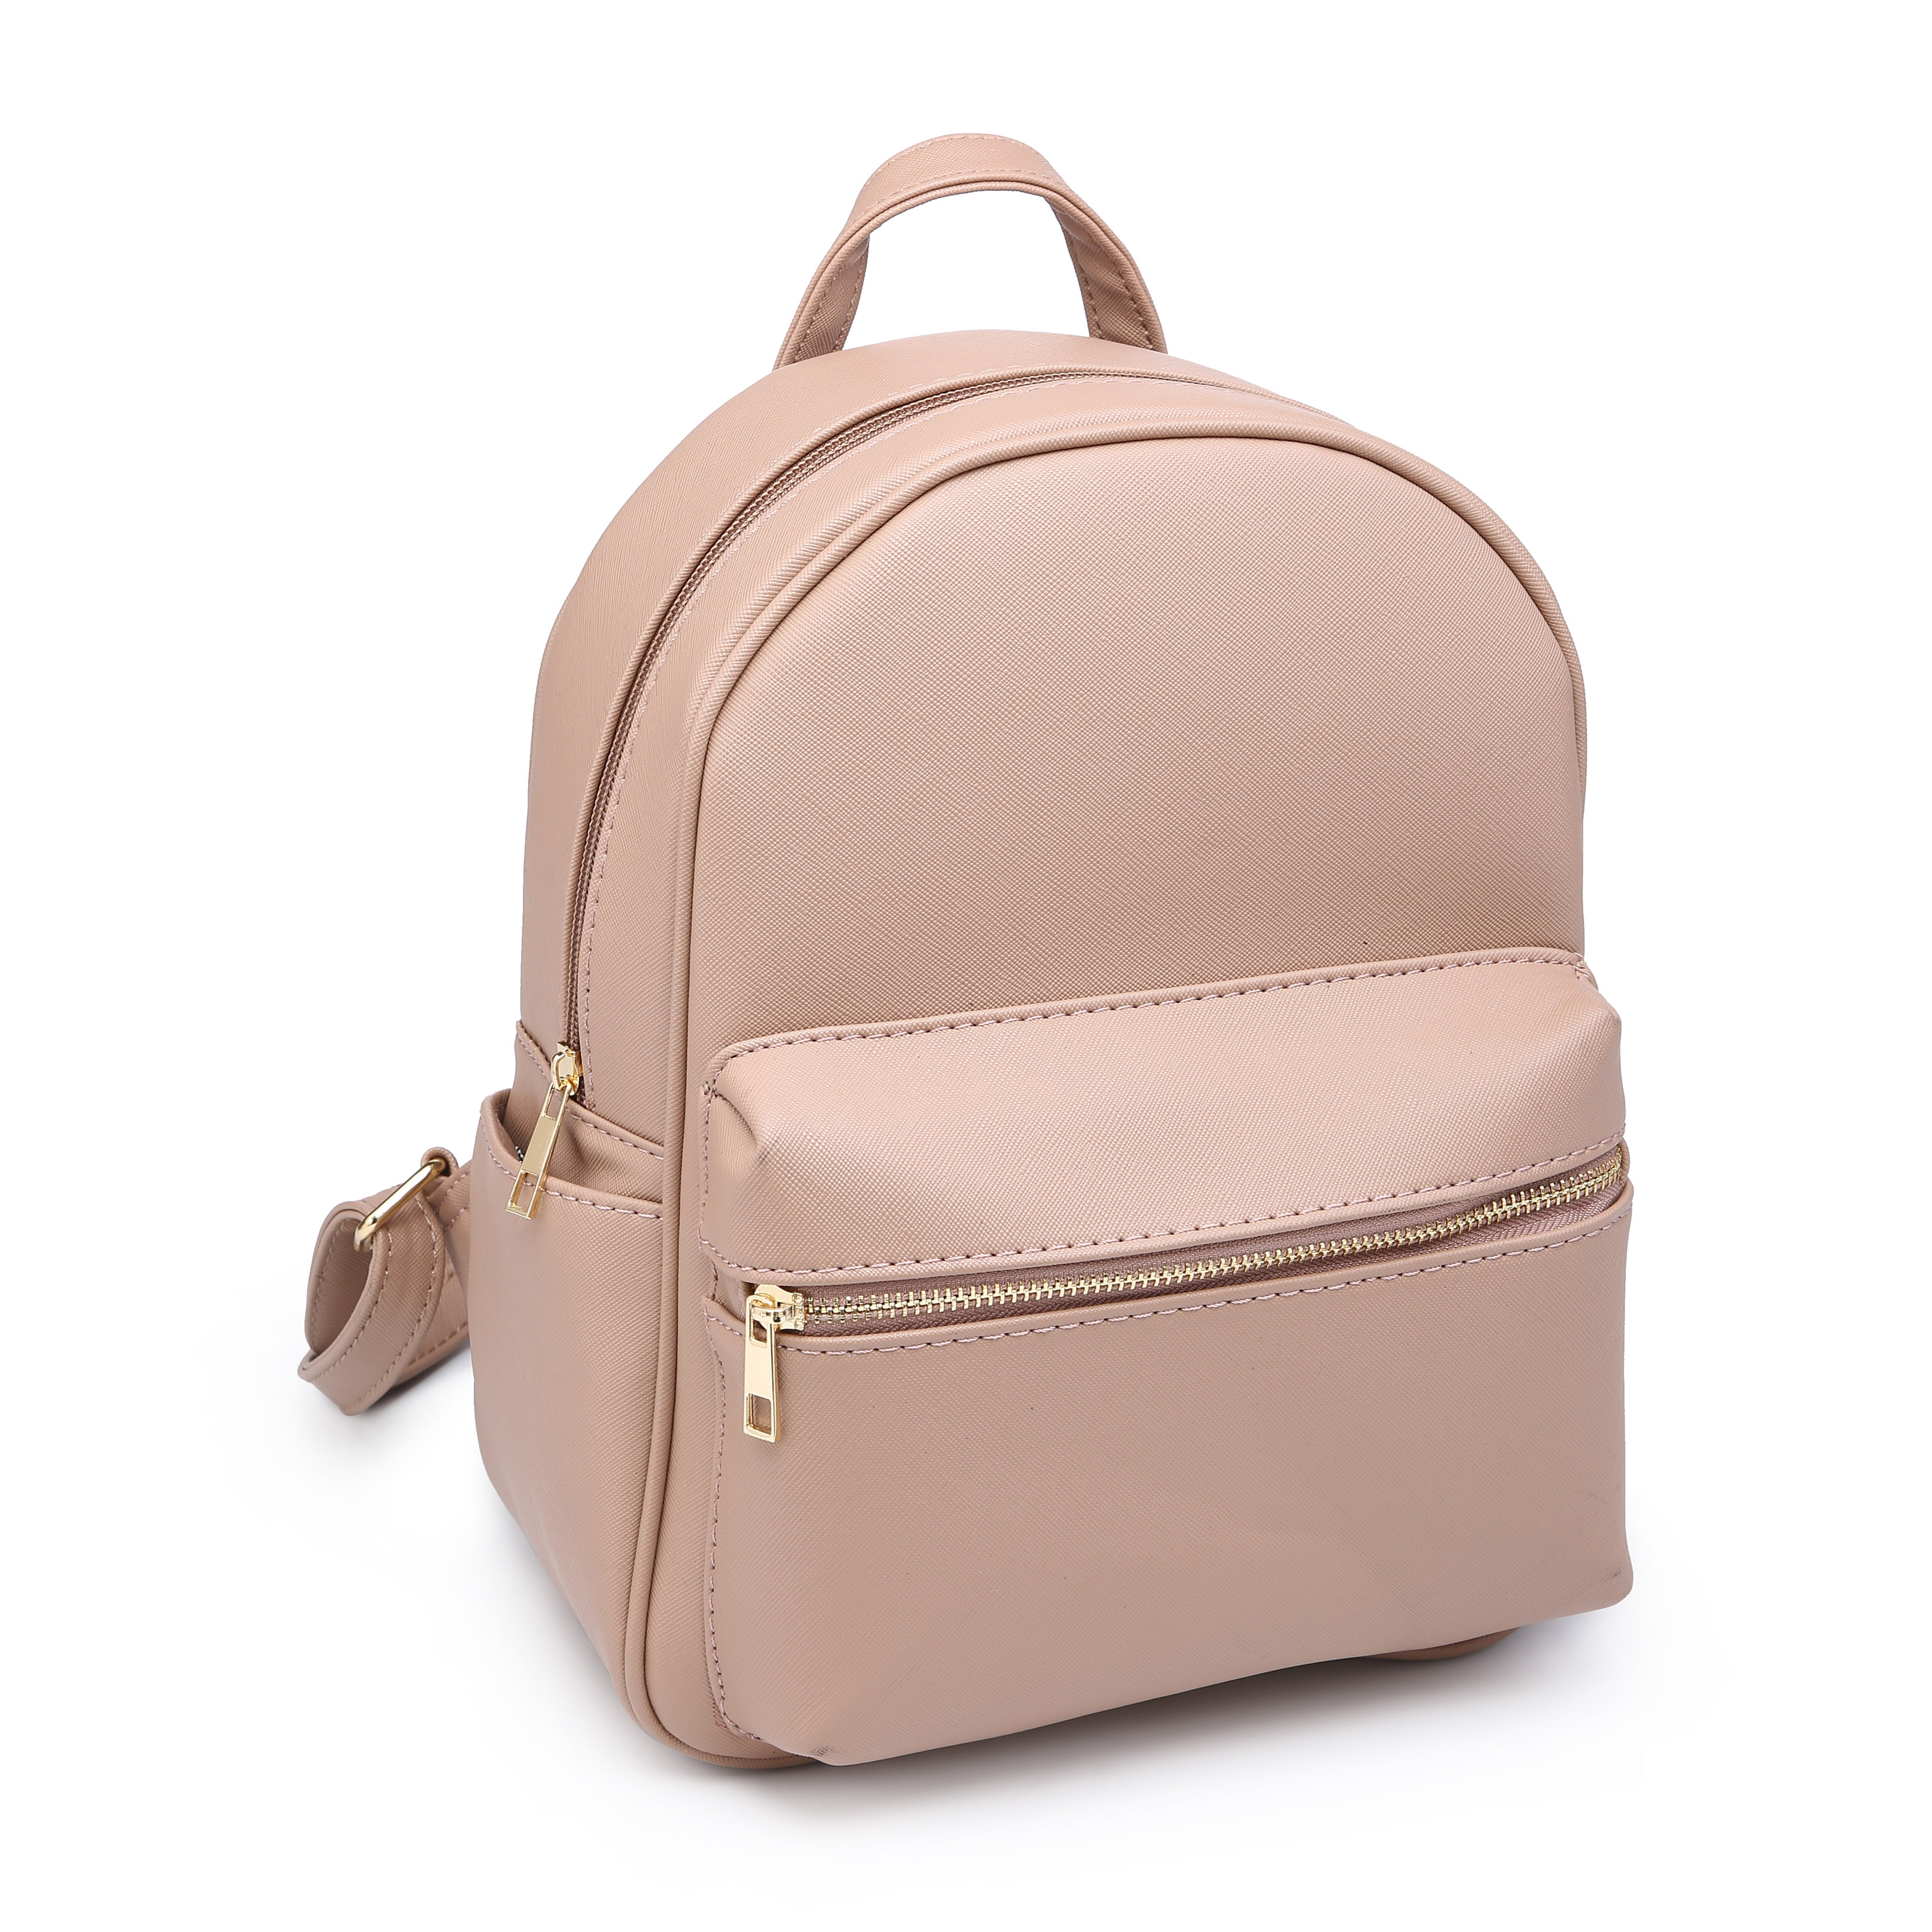 Fashion Shoulder Bag Rucksack PU Leather Women Girls Ladies Backpack Travel Bag Green Maple Leaf Fabric